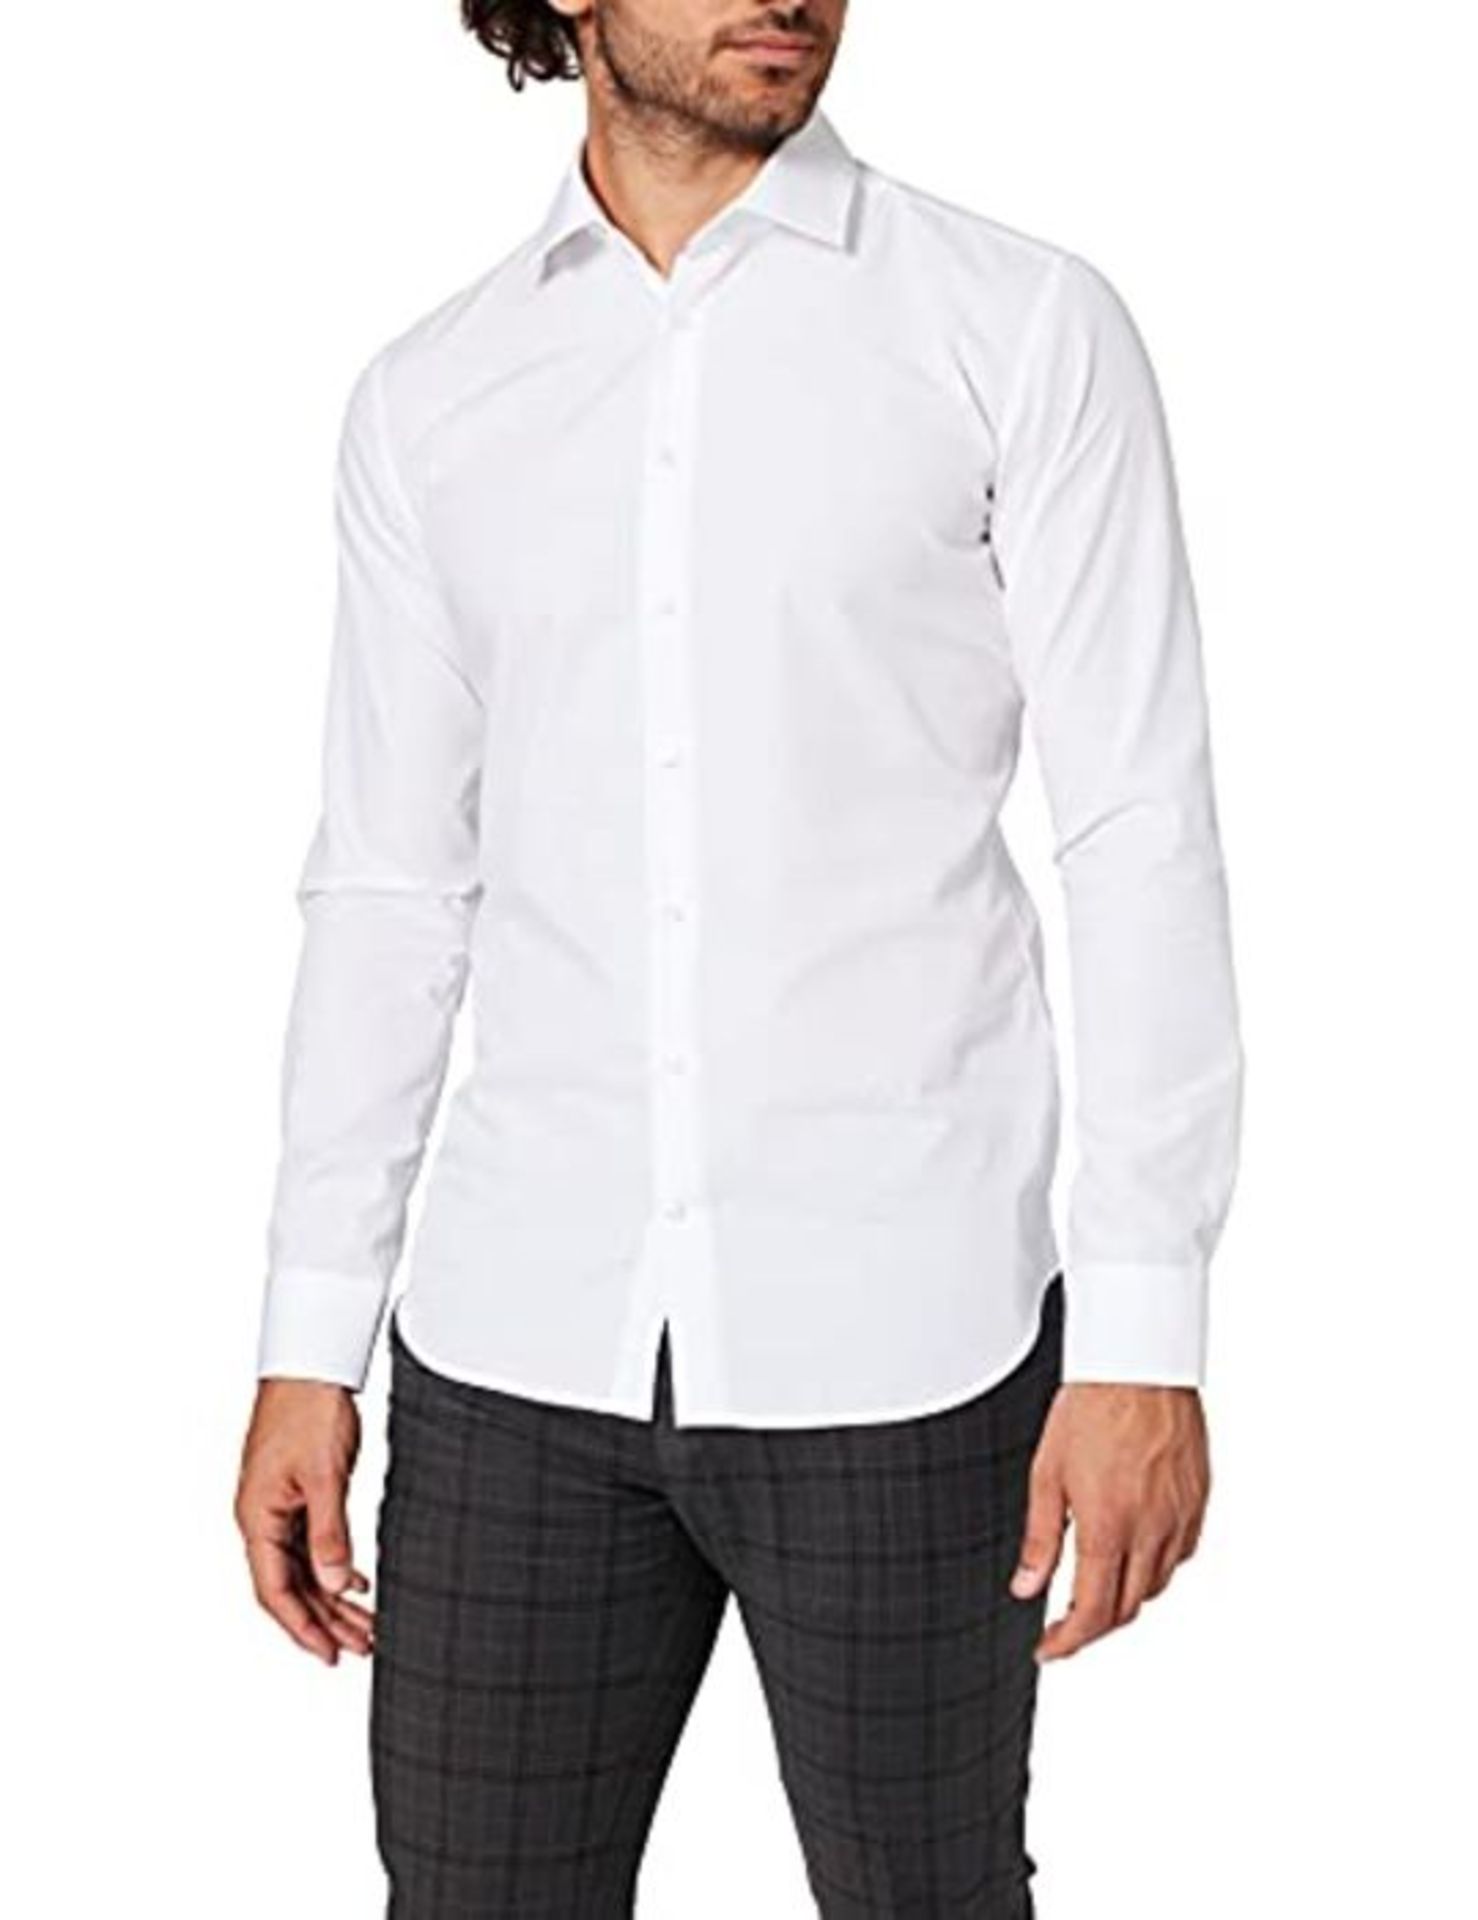 Seidensticker Men's Business Hemd Non-iron shirt with very slim cut - X-Slim fit - Lon